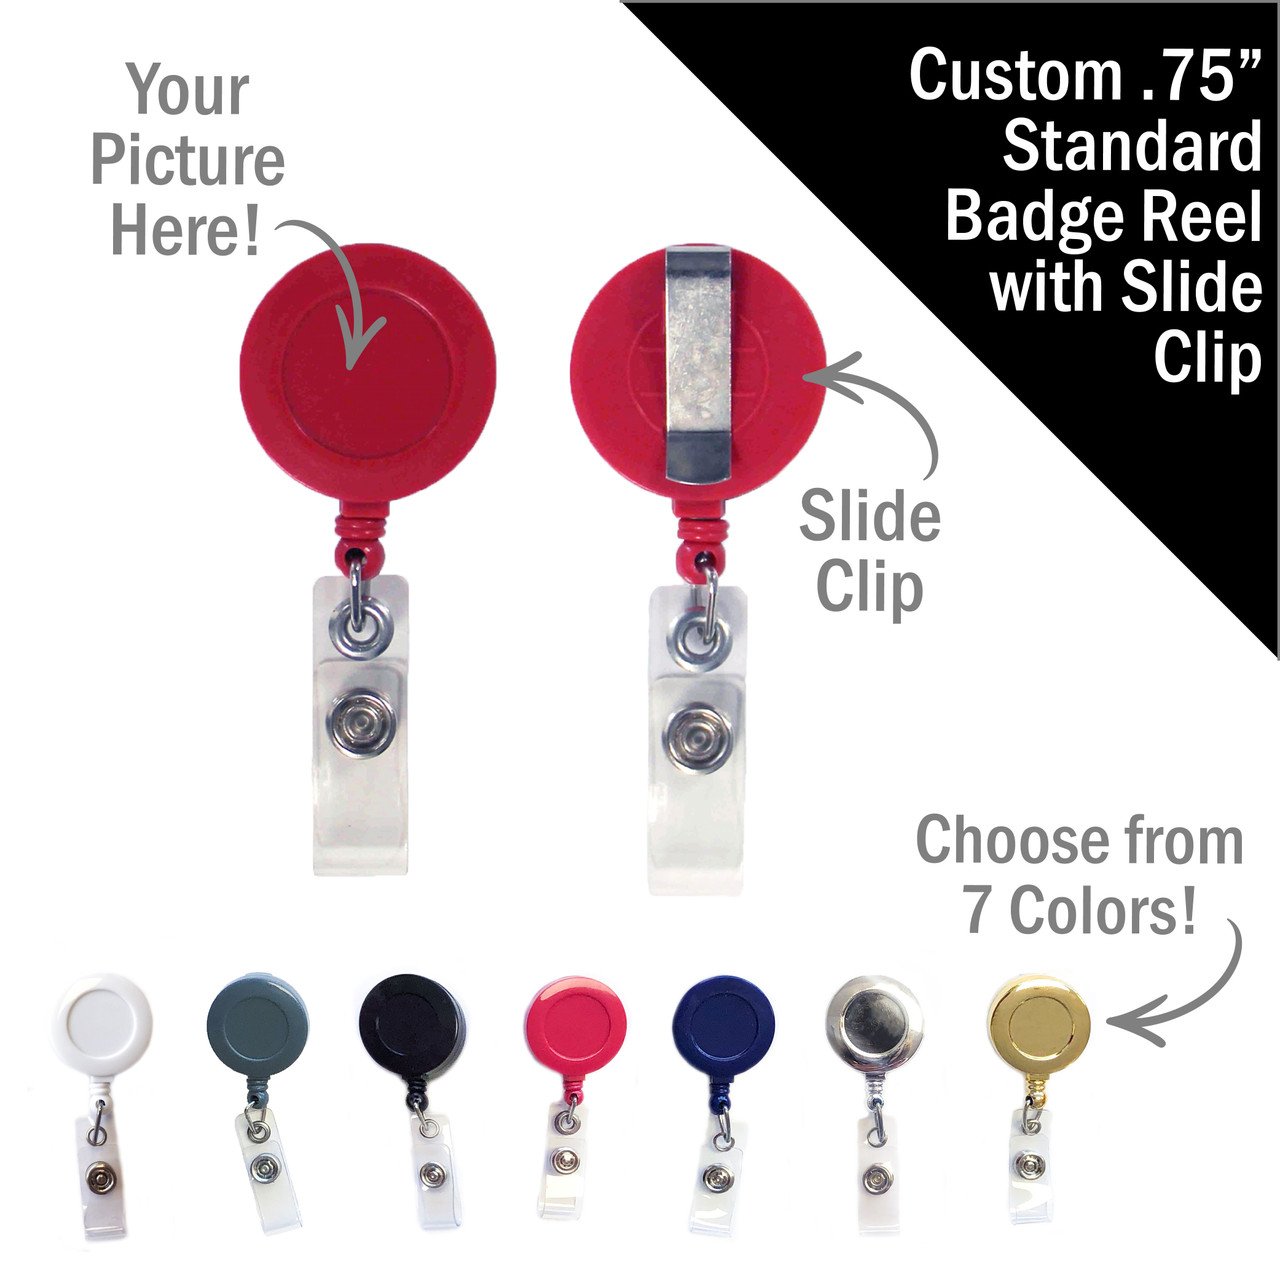 Custom .75 Standard Badge Reel with Slide Clip